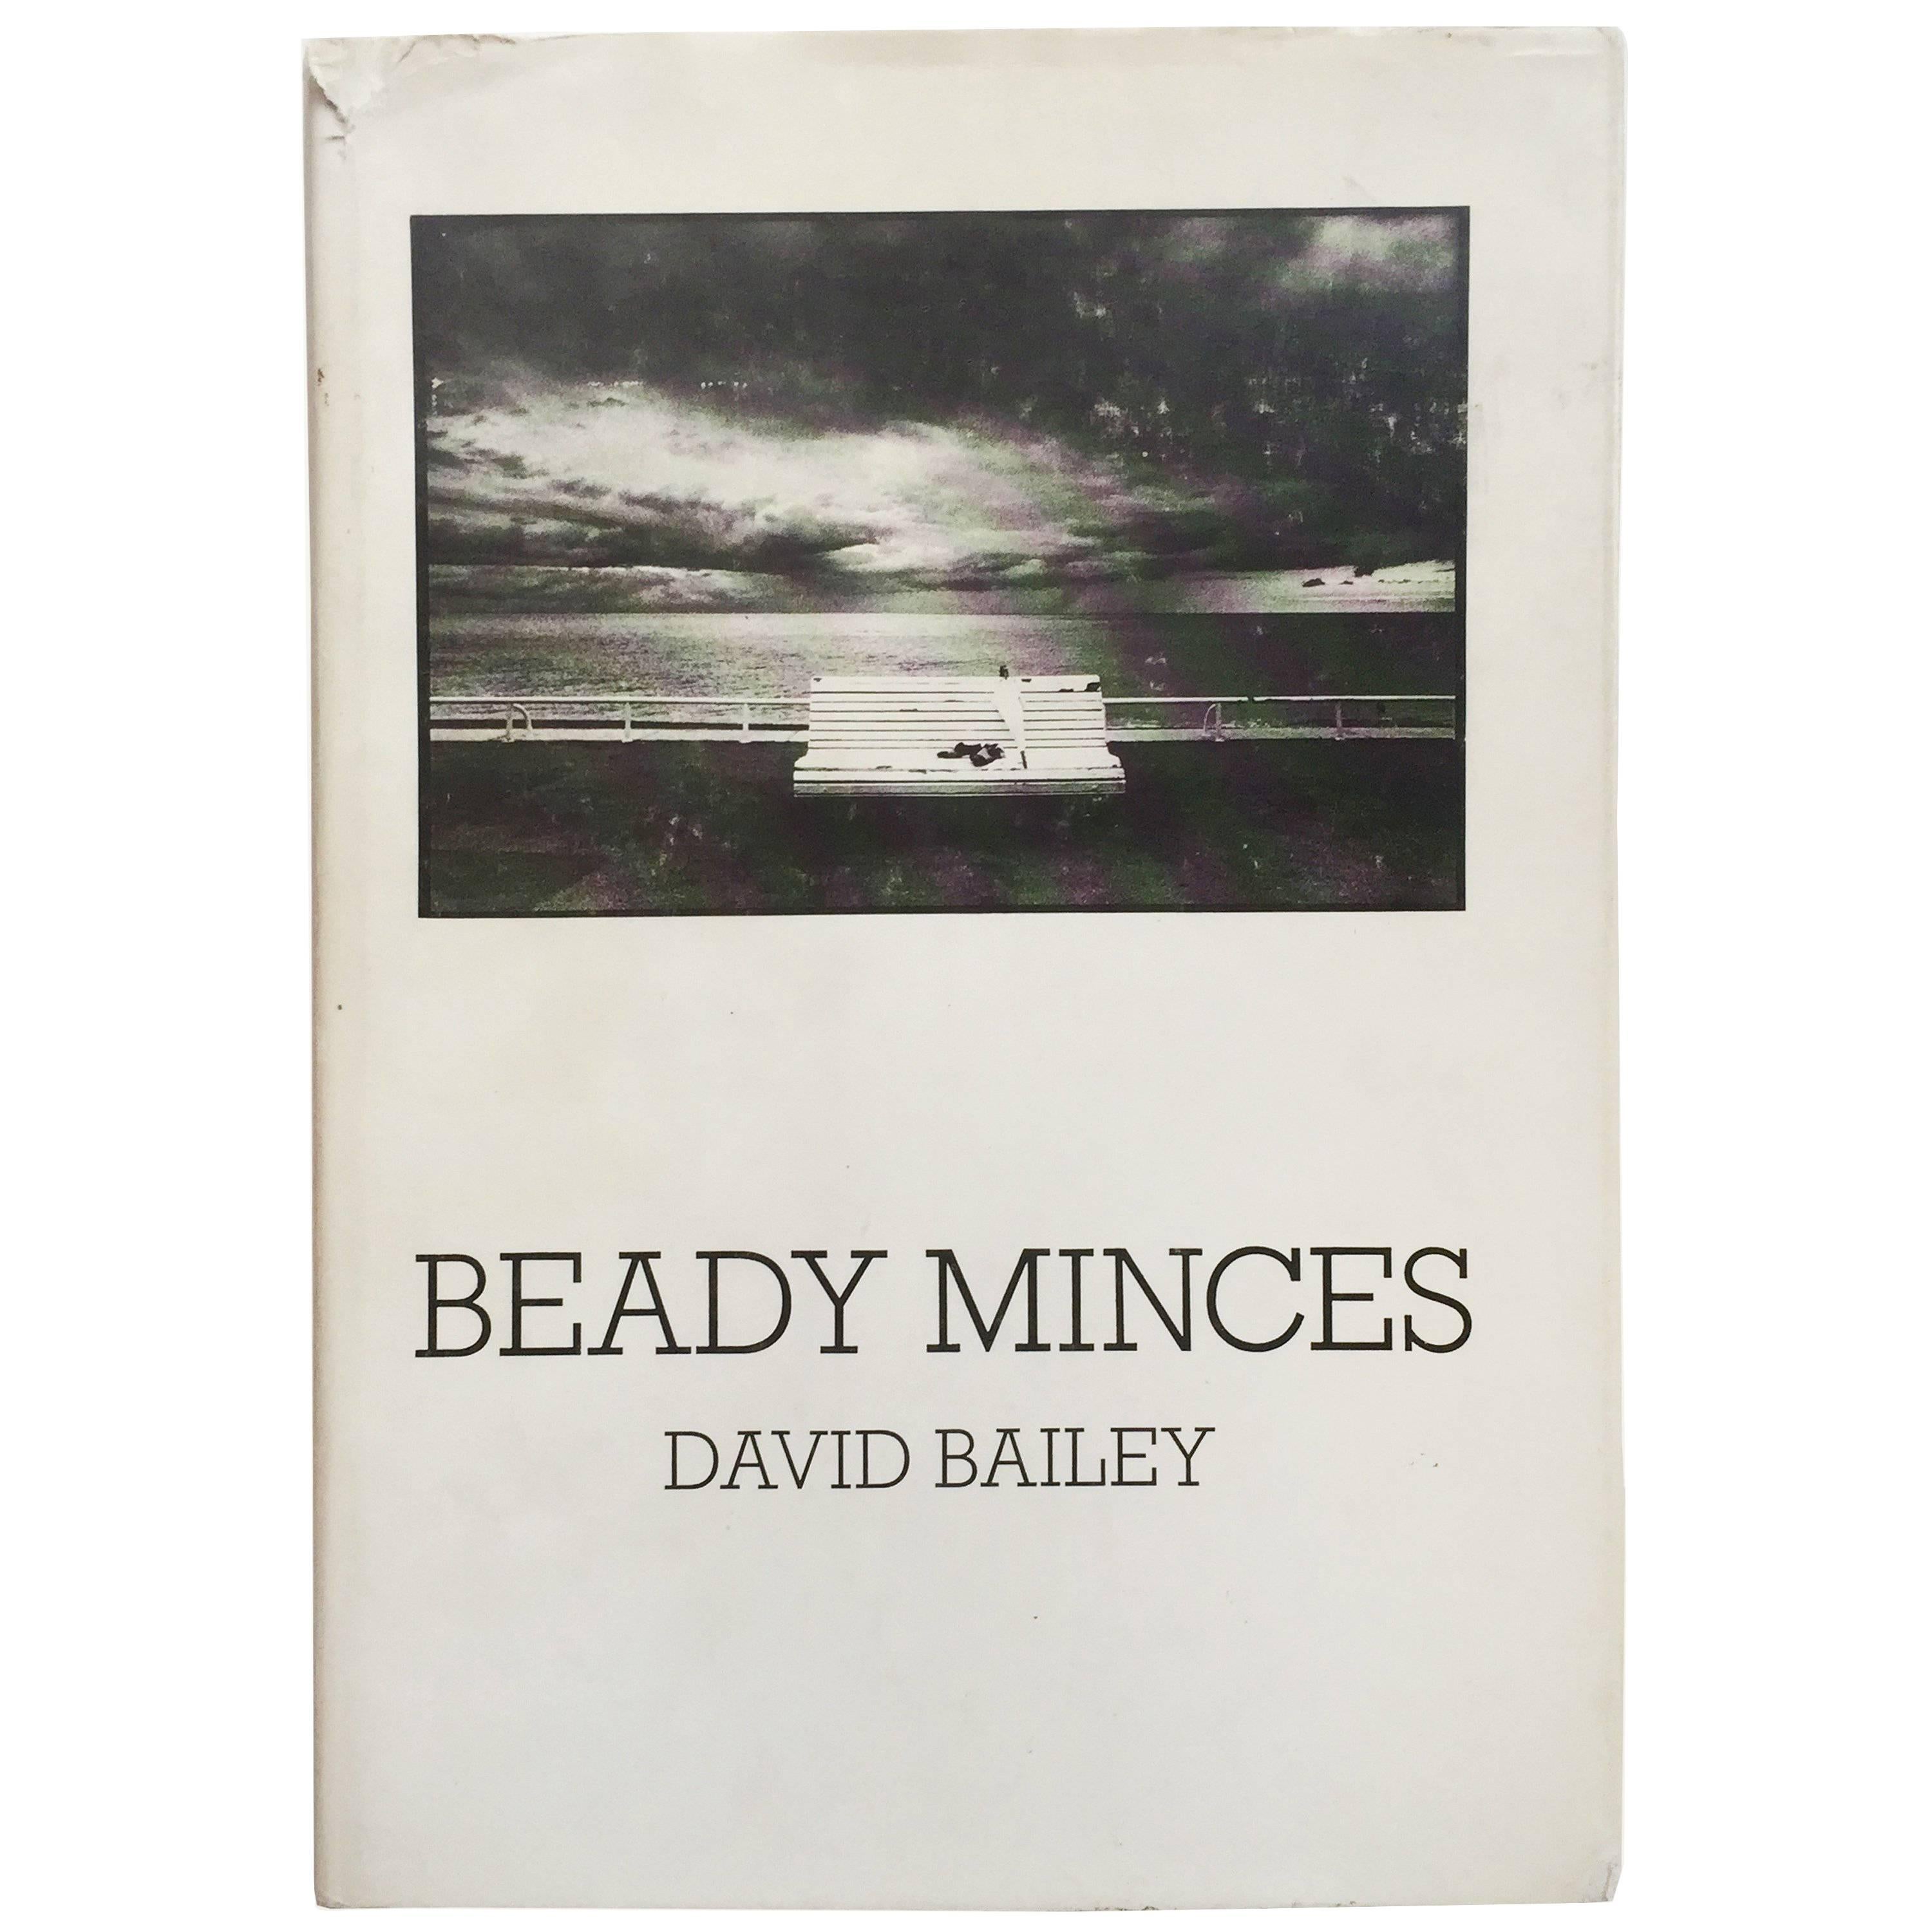 David Bailey "Beady Minces" Book, 1973